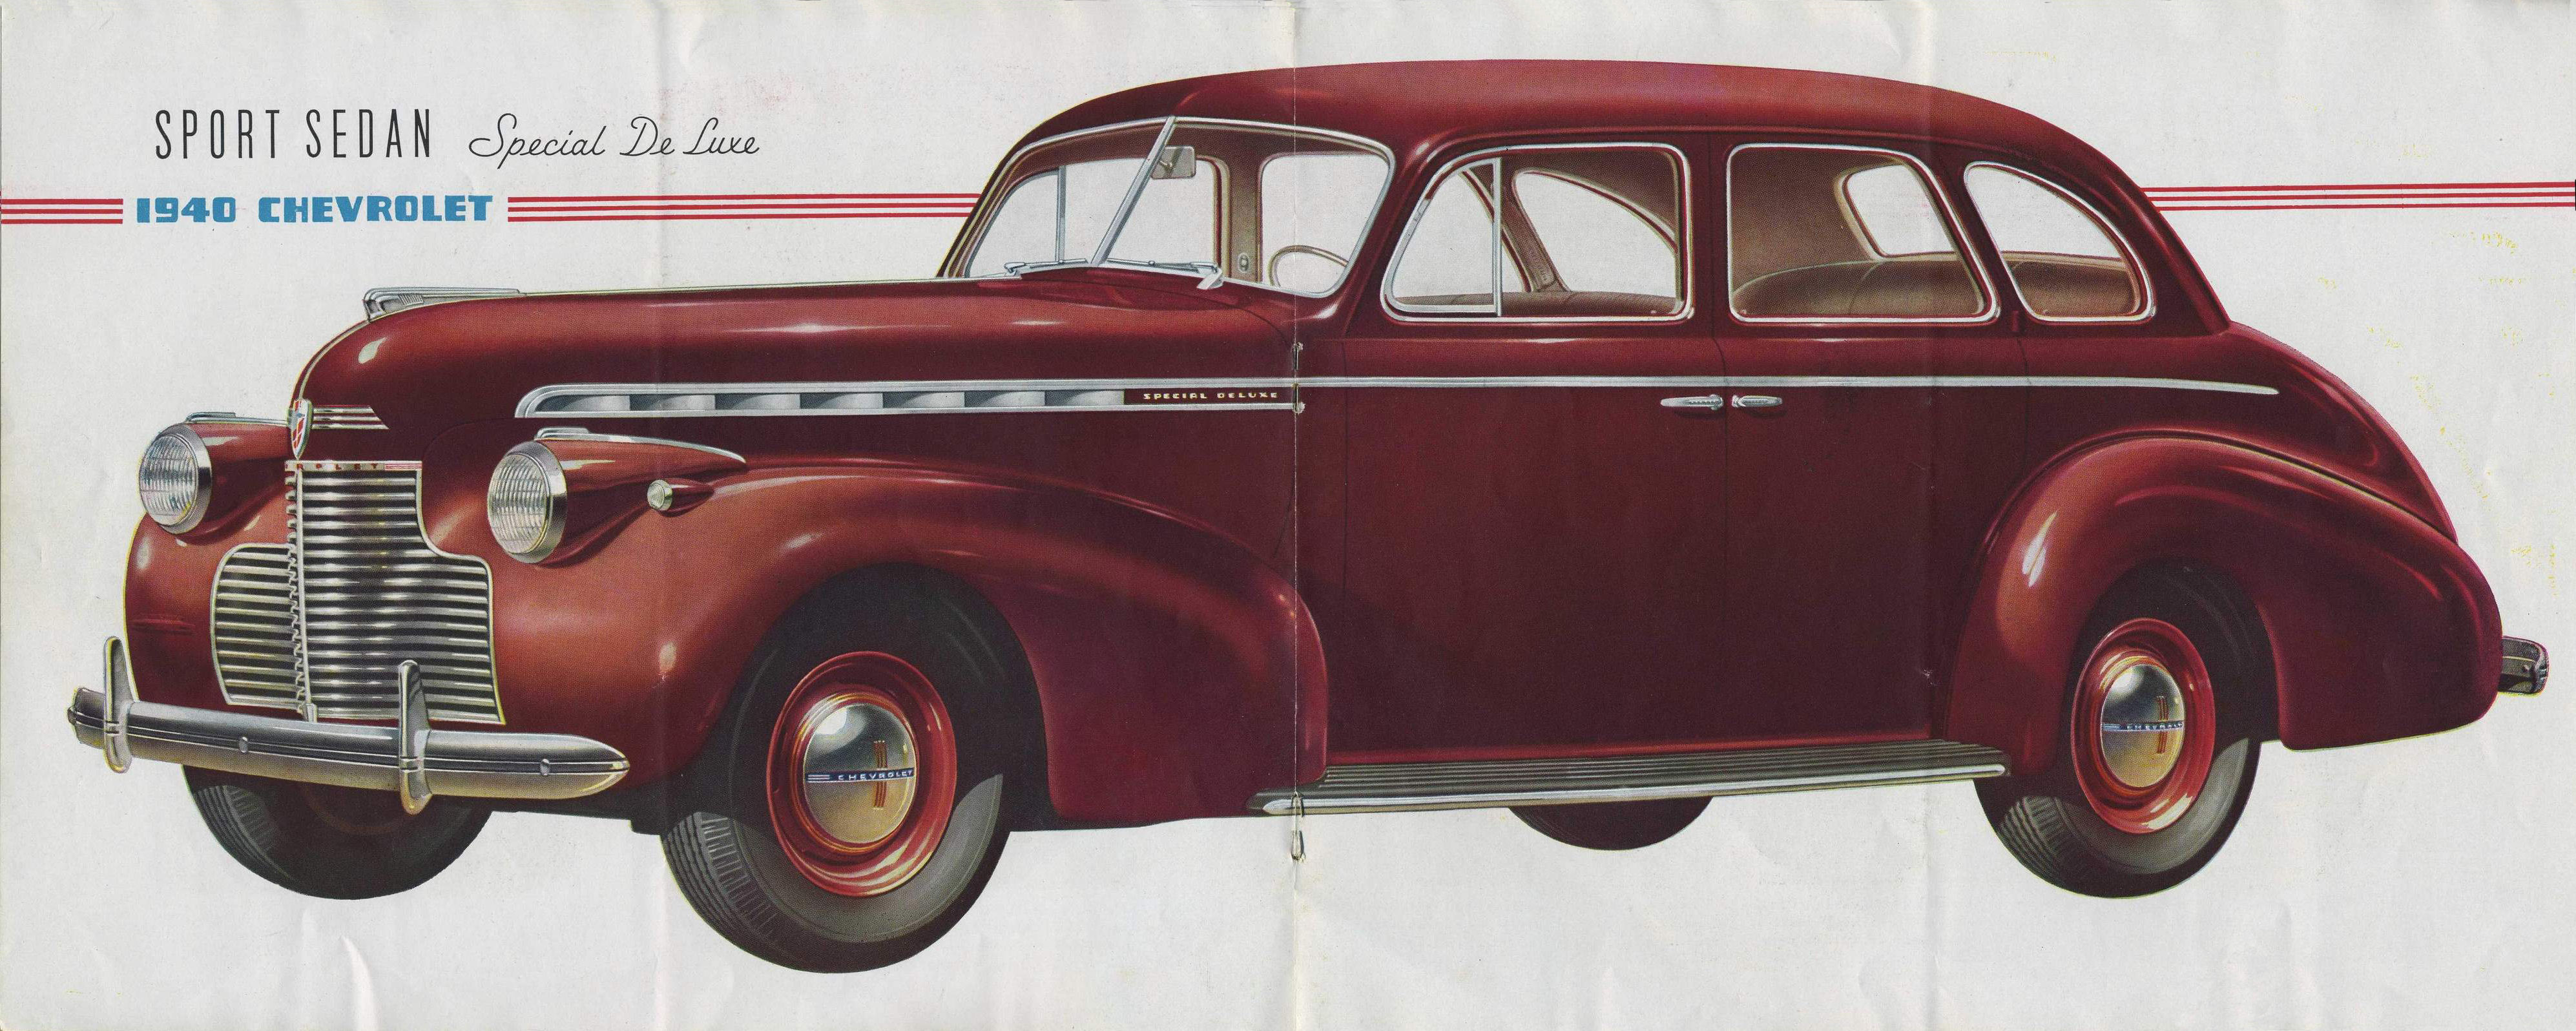 1940 Chevrolet #8